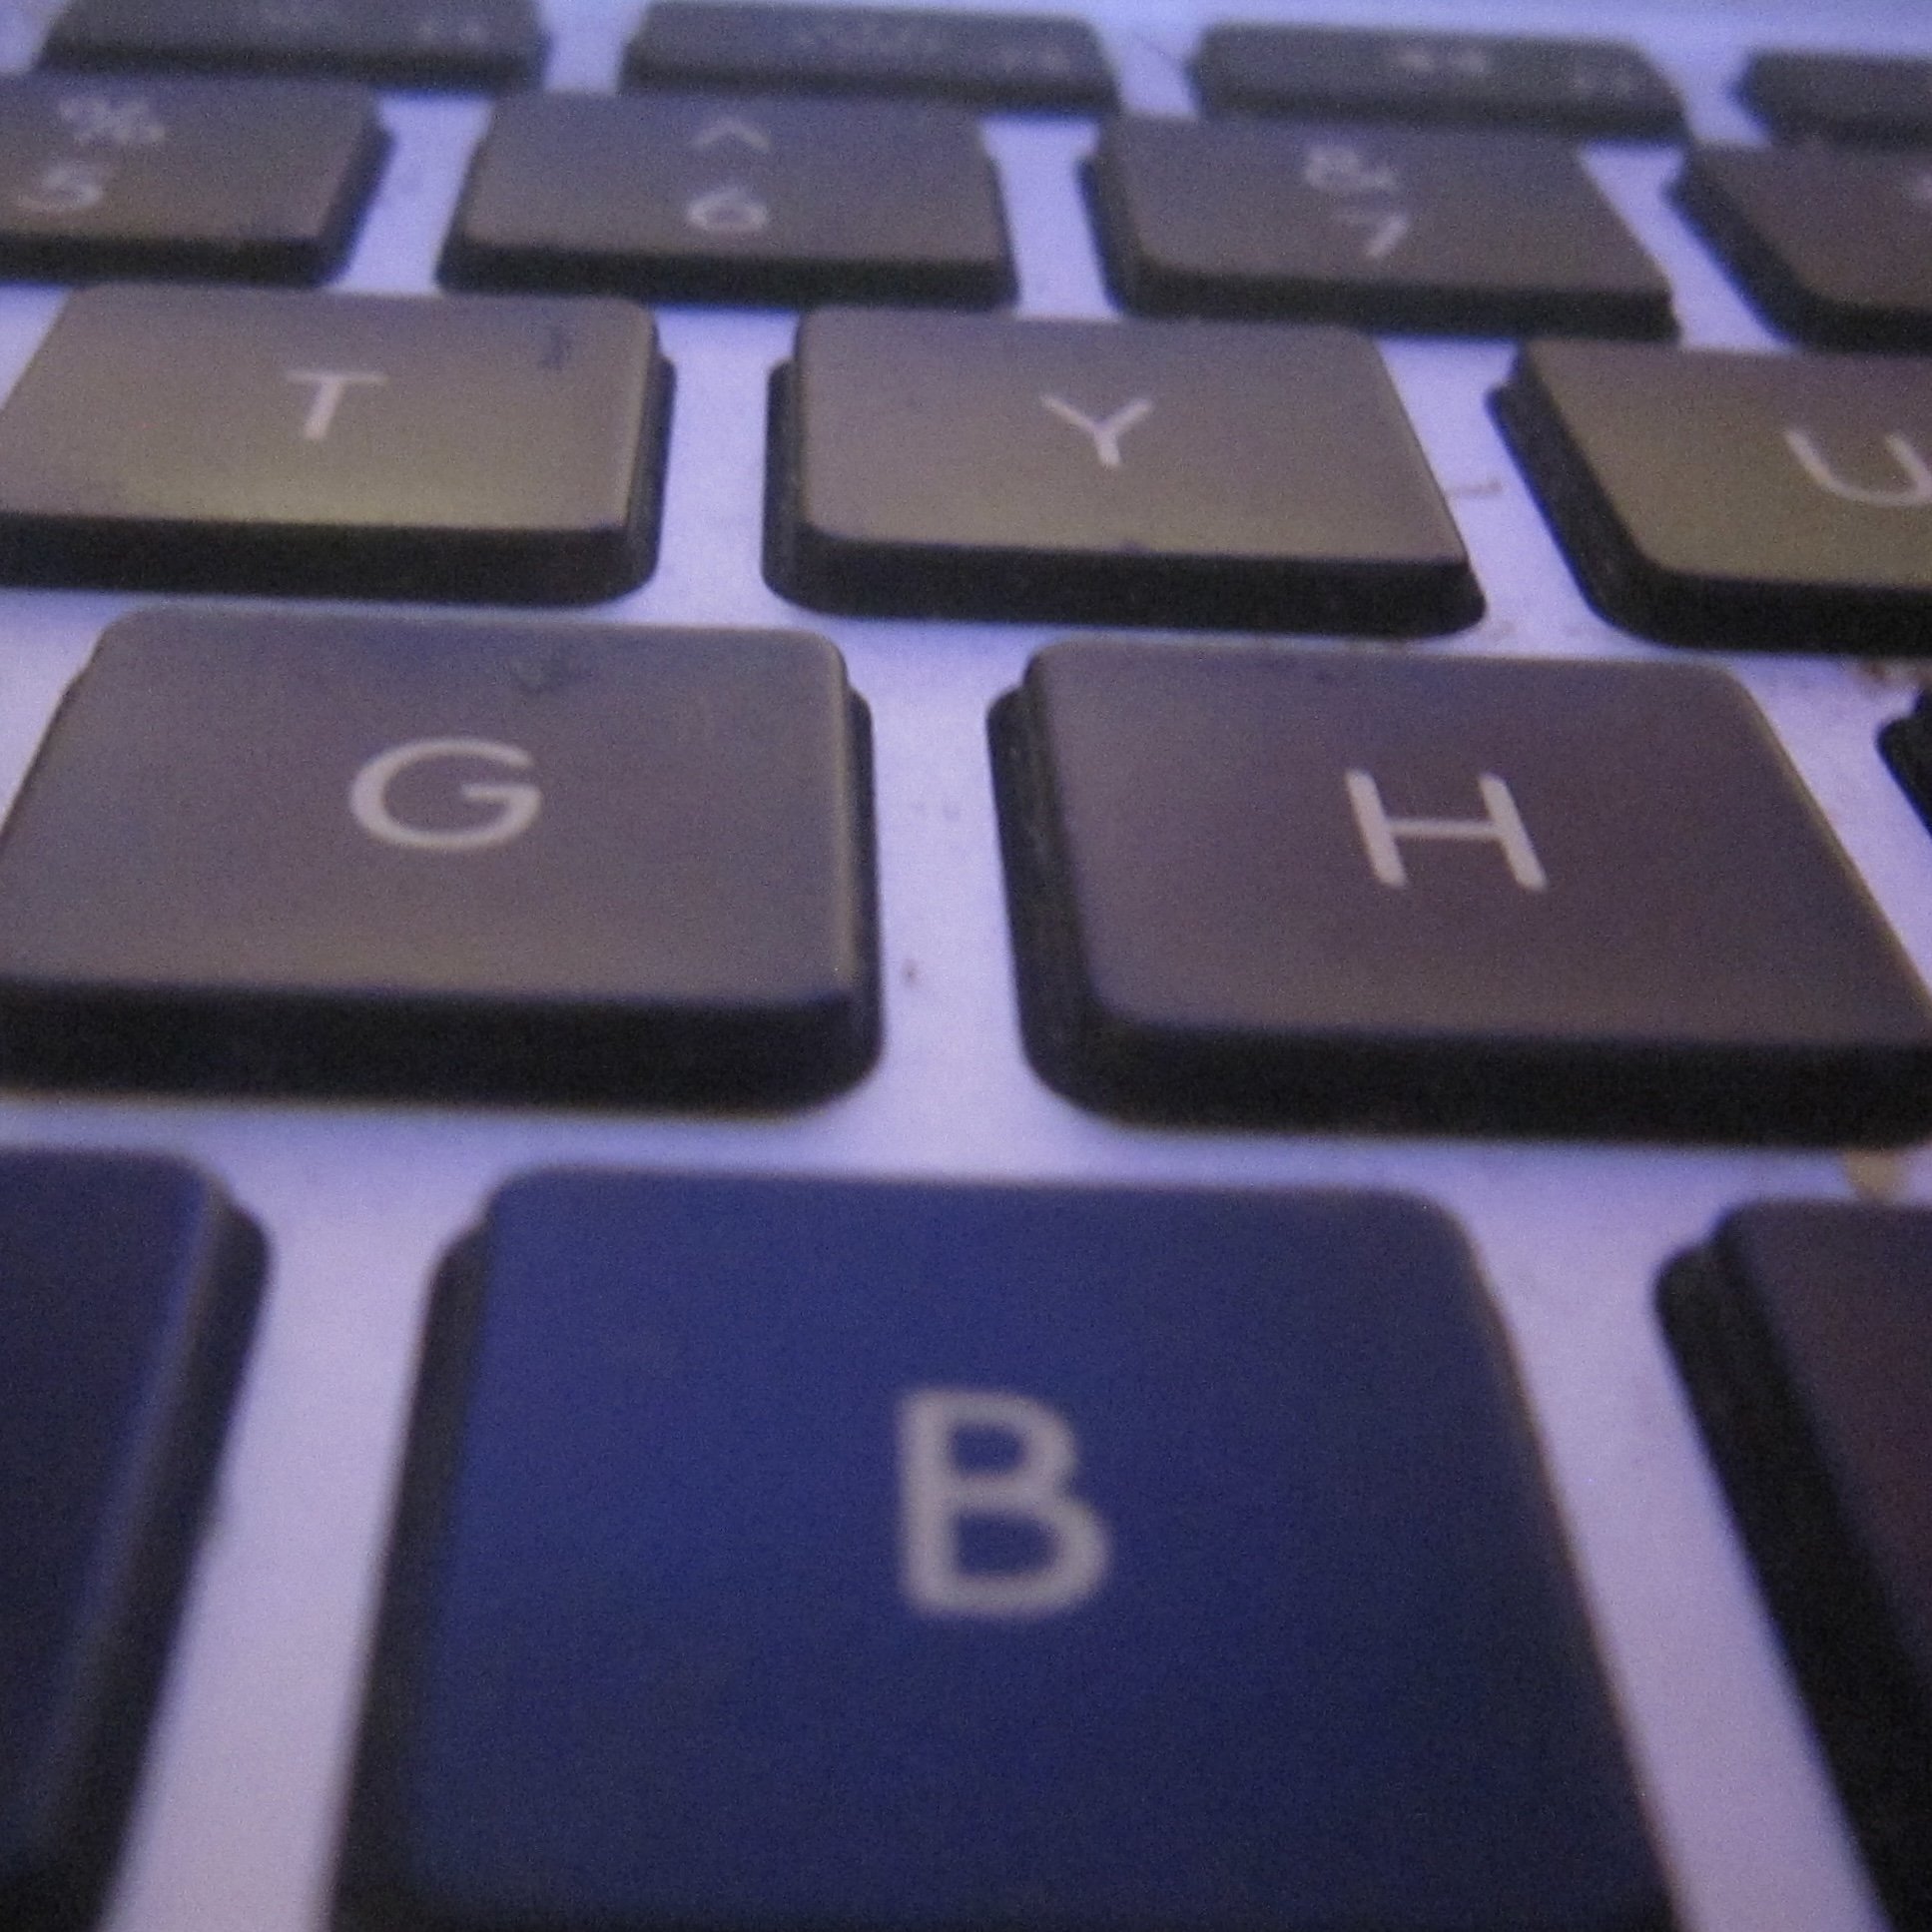 close up of my keyboard